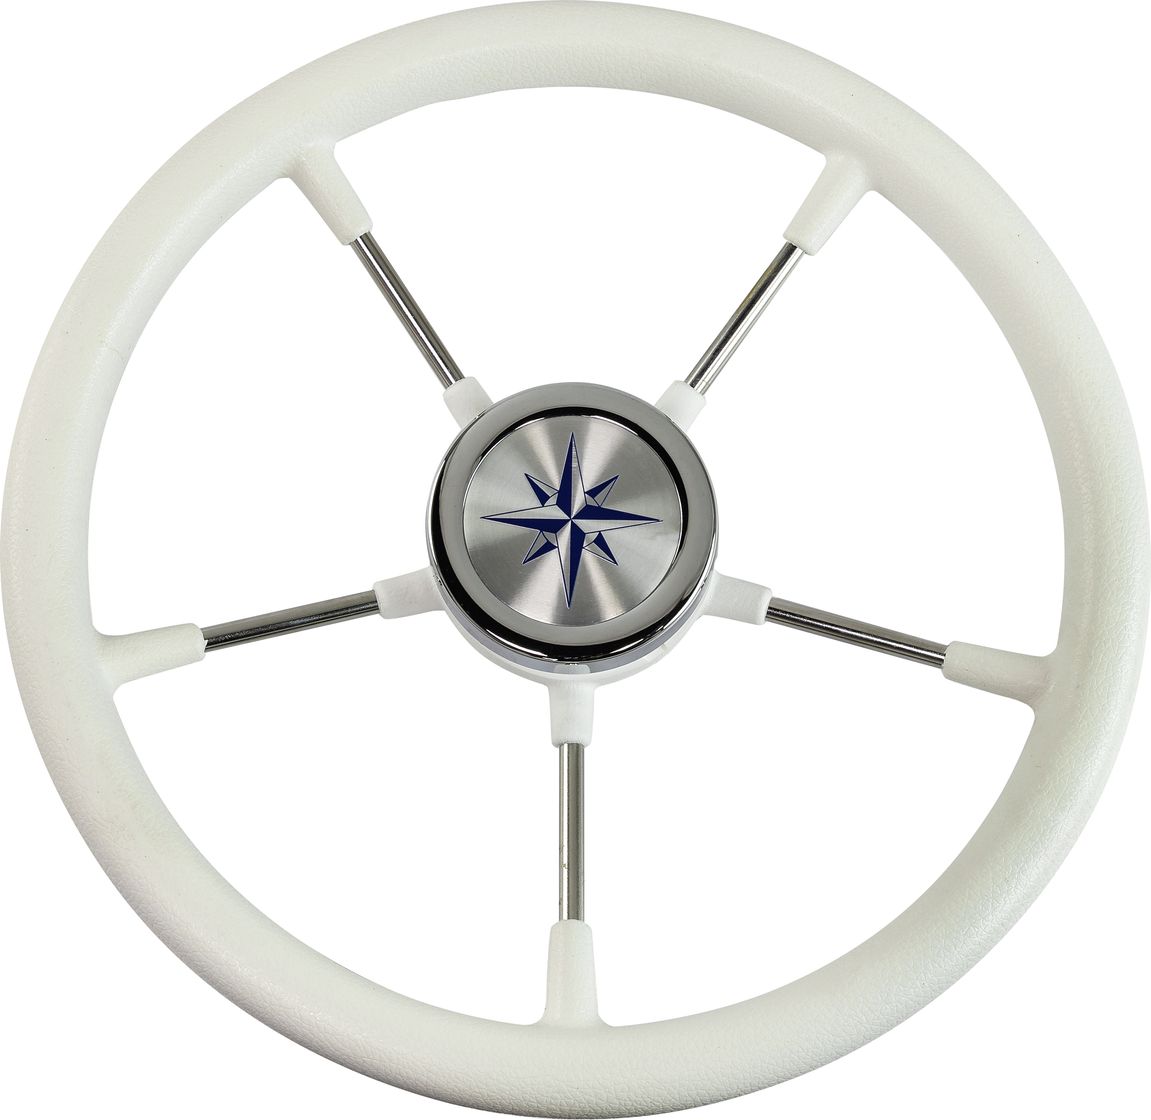 Рулевое колесо RIVA RSL обод белый, спицы серебряные д. 360 мм VN735022-08 рулевое колесо delfino обод спицы серебряные д 340 мм vn70401 01